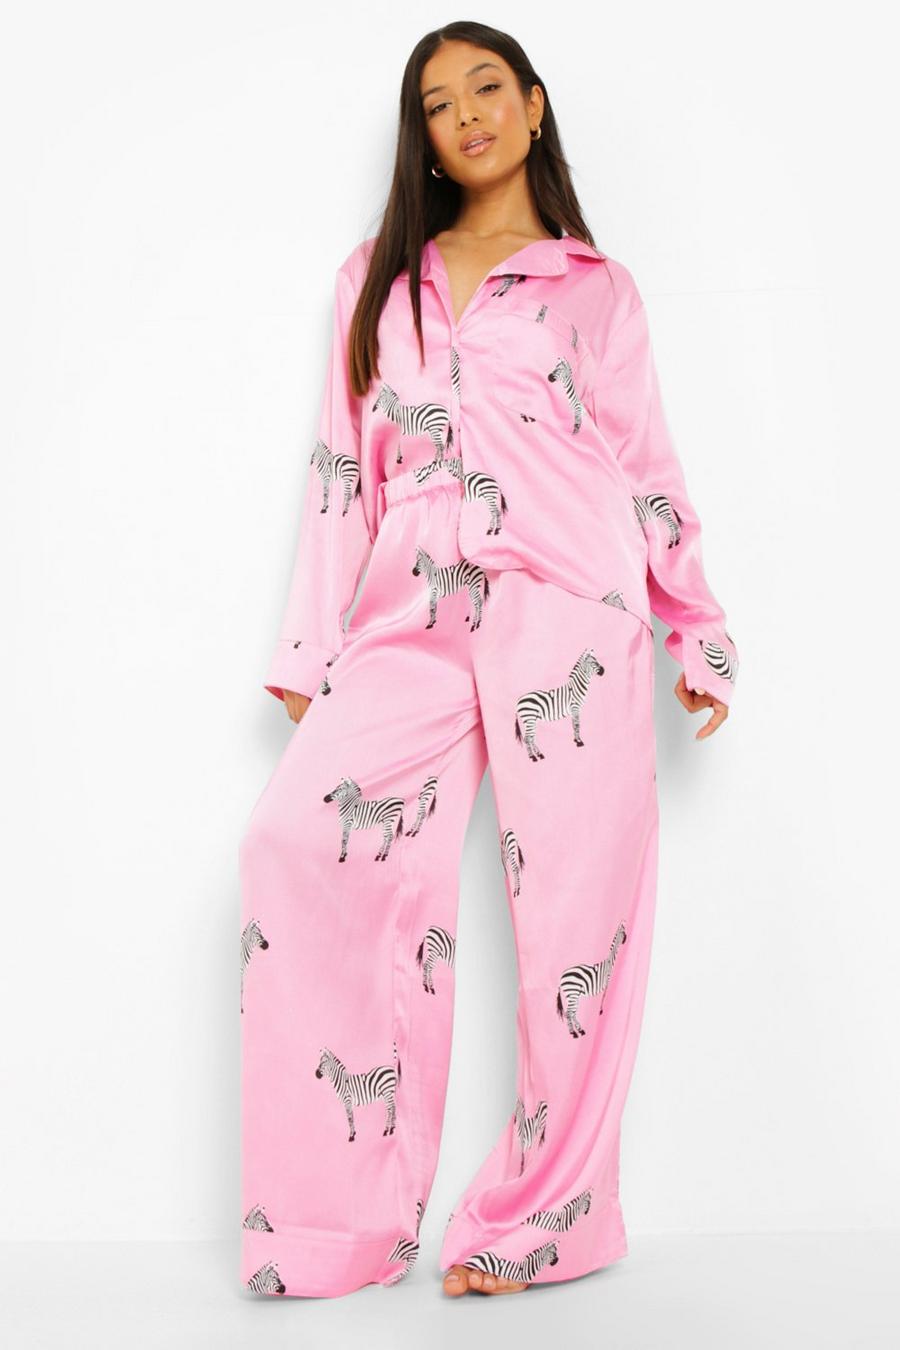 Petite Pyjama-Hose mit Zebra-Print, Hot pink rosa